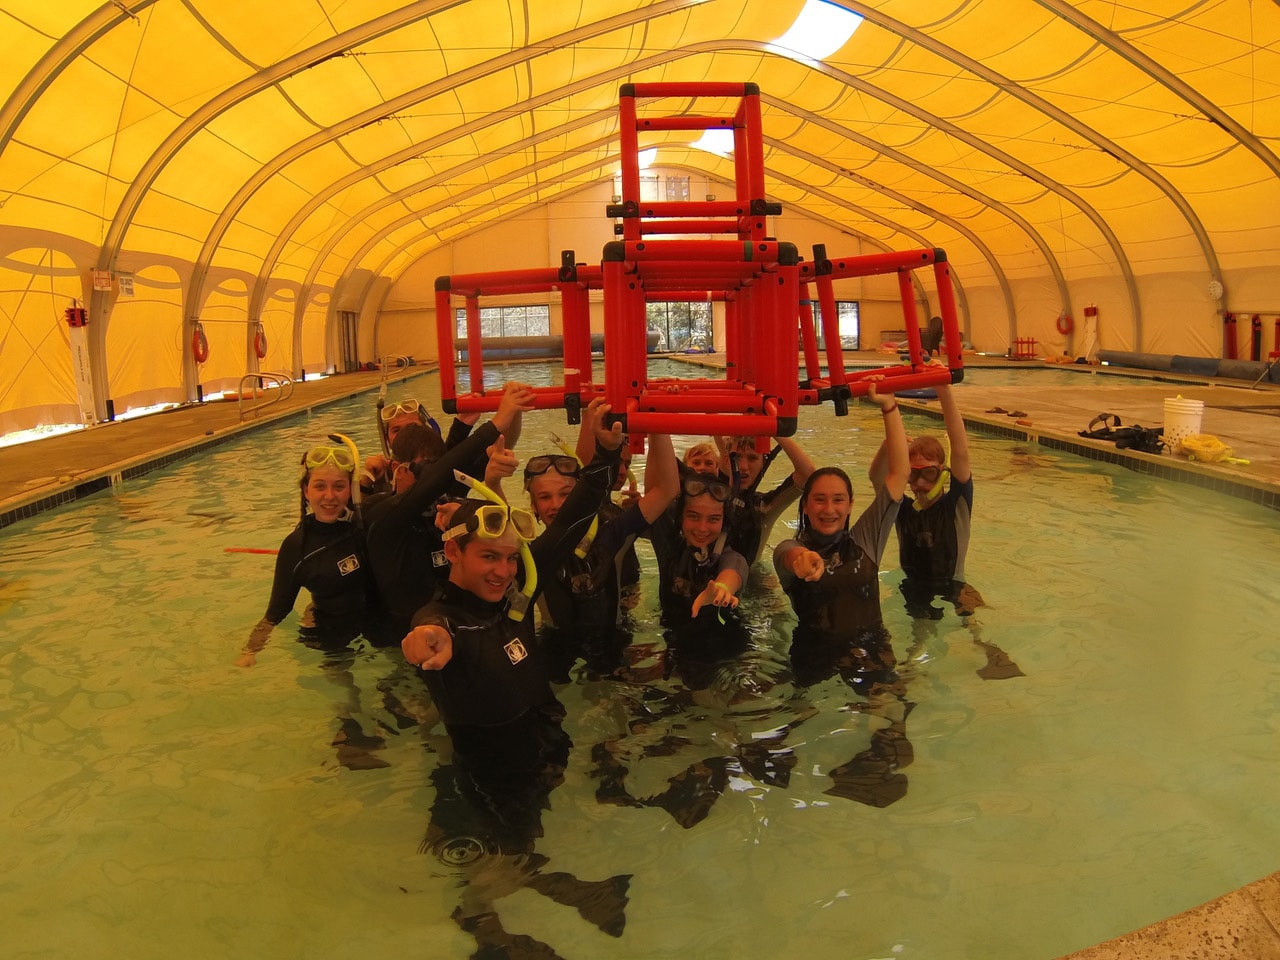 Kids pointing in snorkeling gear in pool.